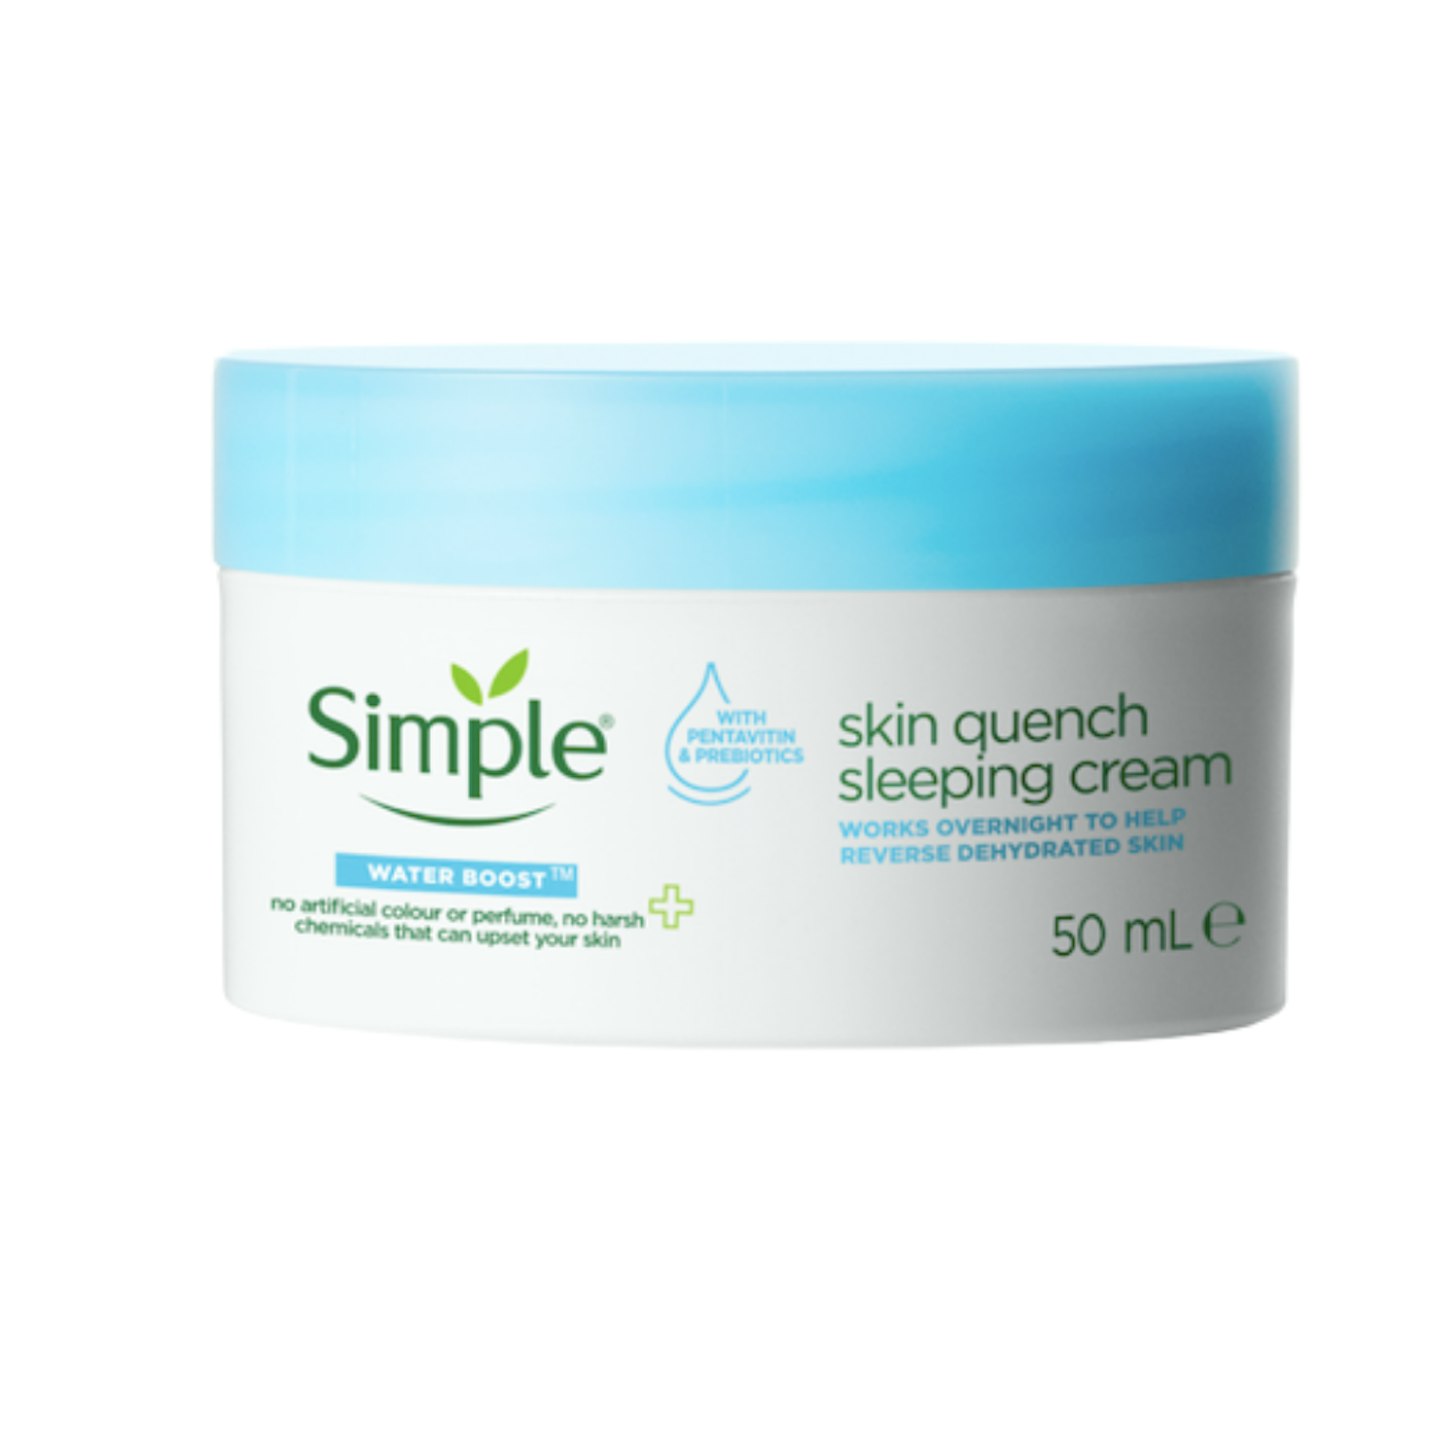 Simple Water Boost Moisturiser Skin Quench Sleeping Cream